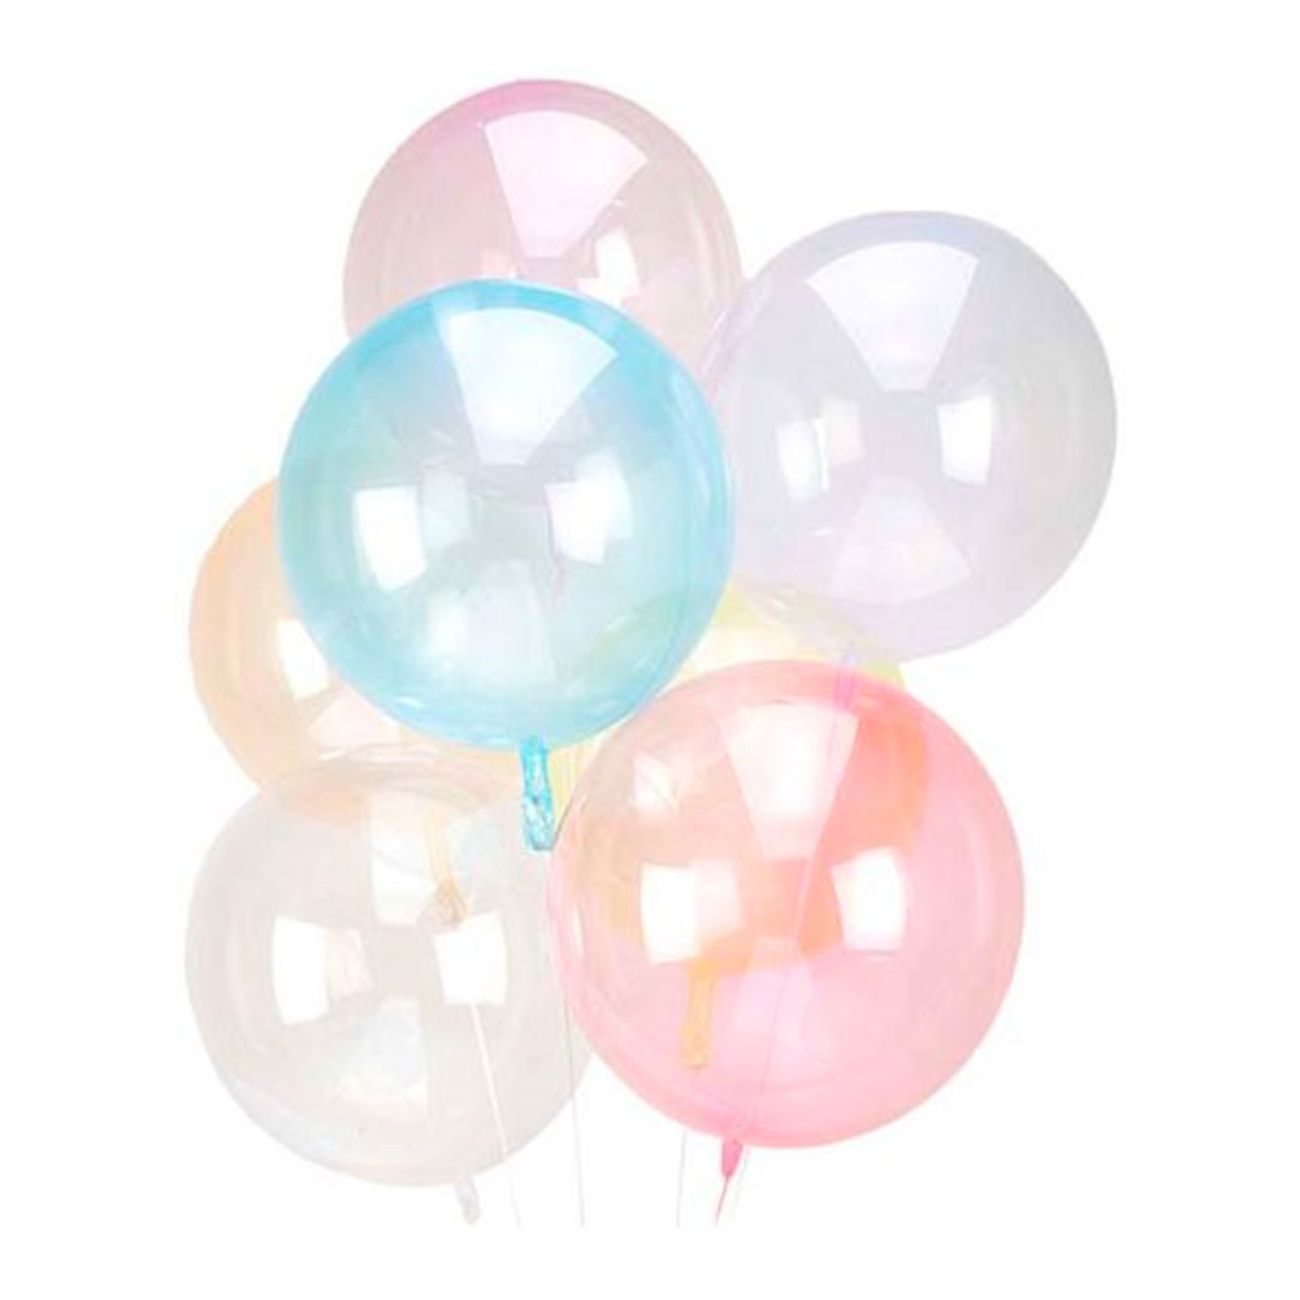 klotballong-klar-transparent-73099-2